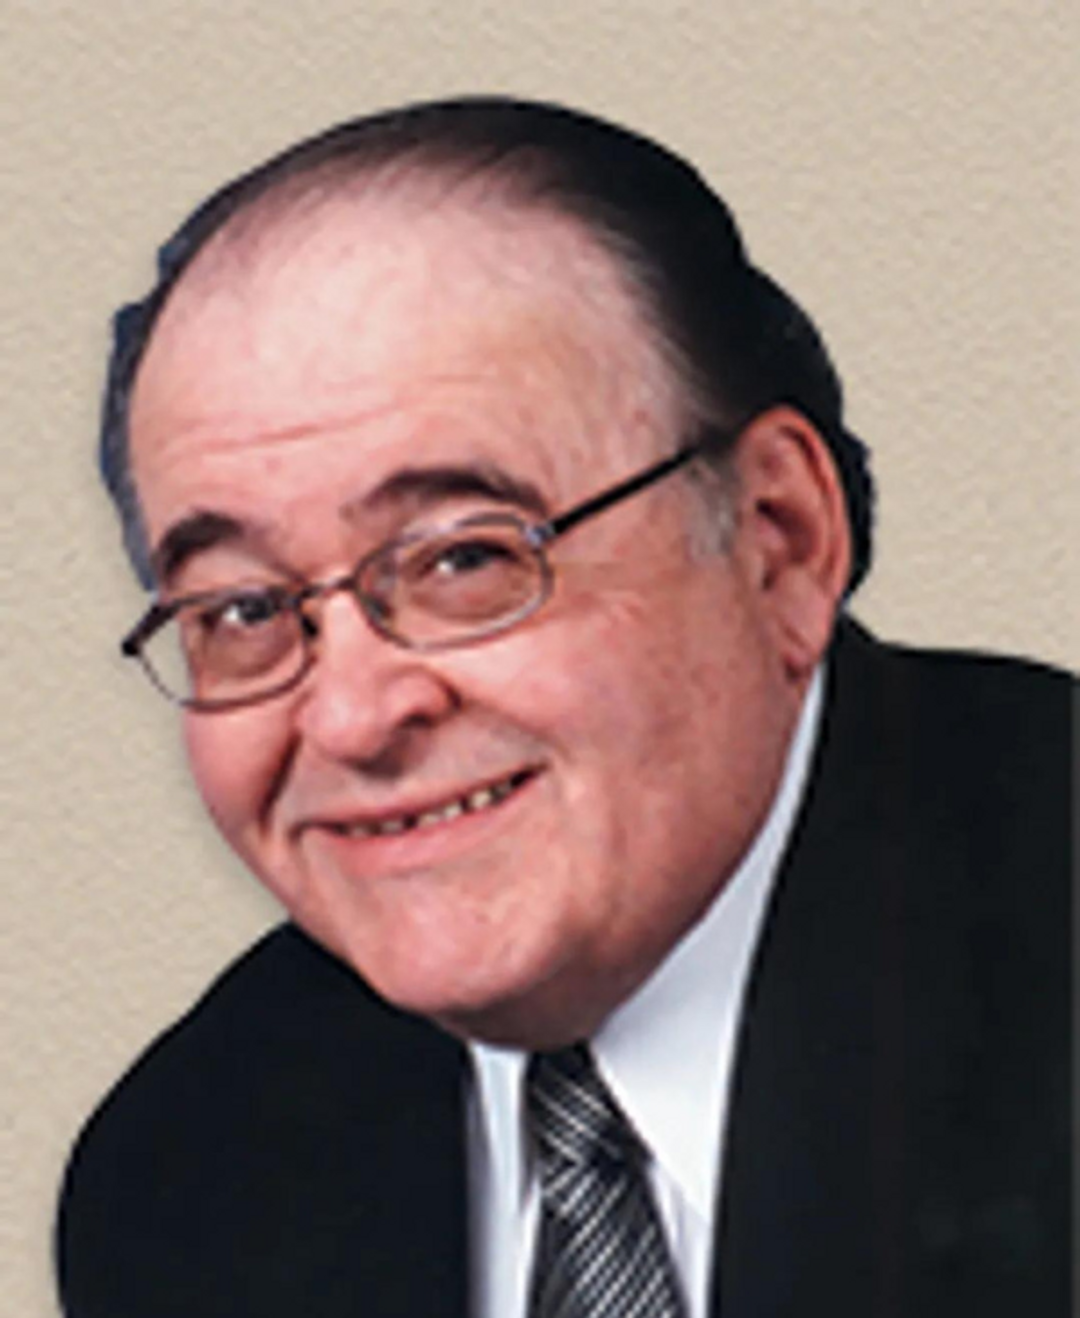 John J. Corcoran